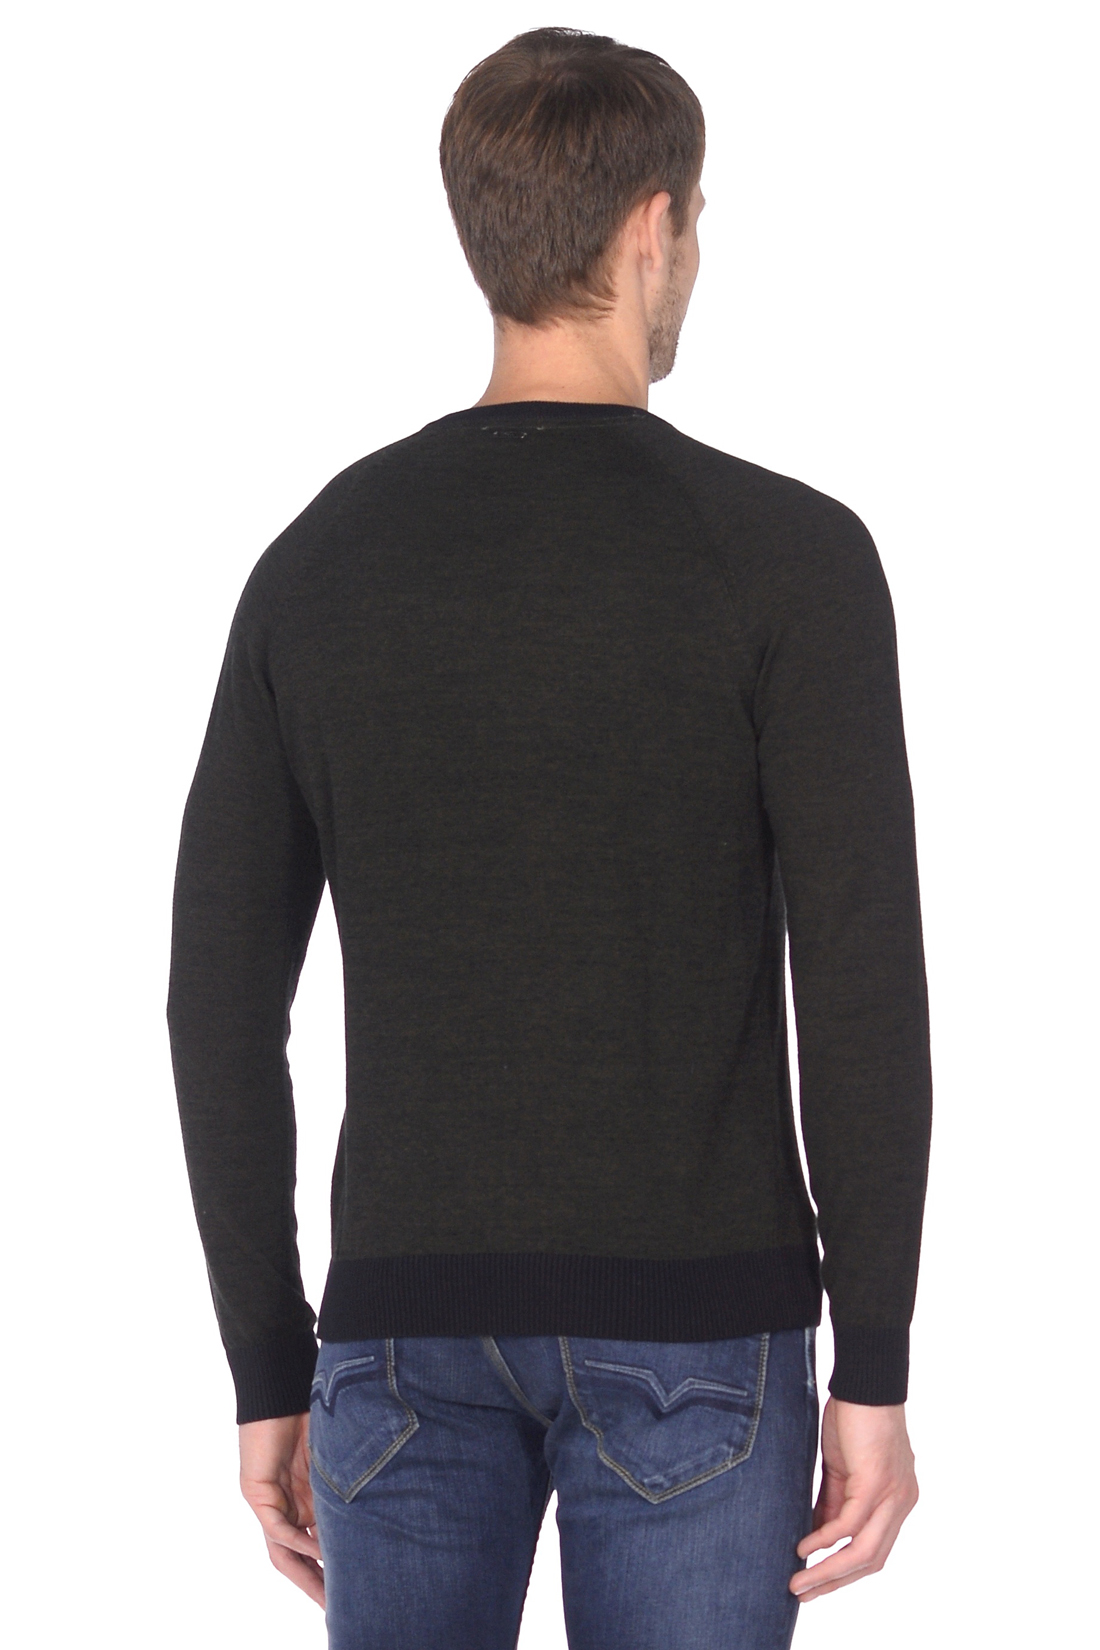 Пуловер с рукавами-реглан (арт. baon B638557), размер L, цвет зеленый Пуловер с рукавами-реглан (арт. baon B638557) - фото 2